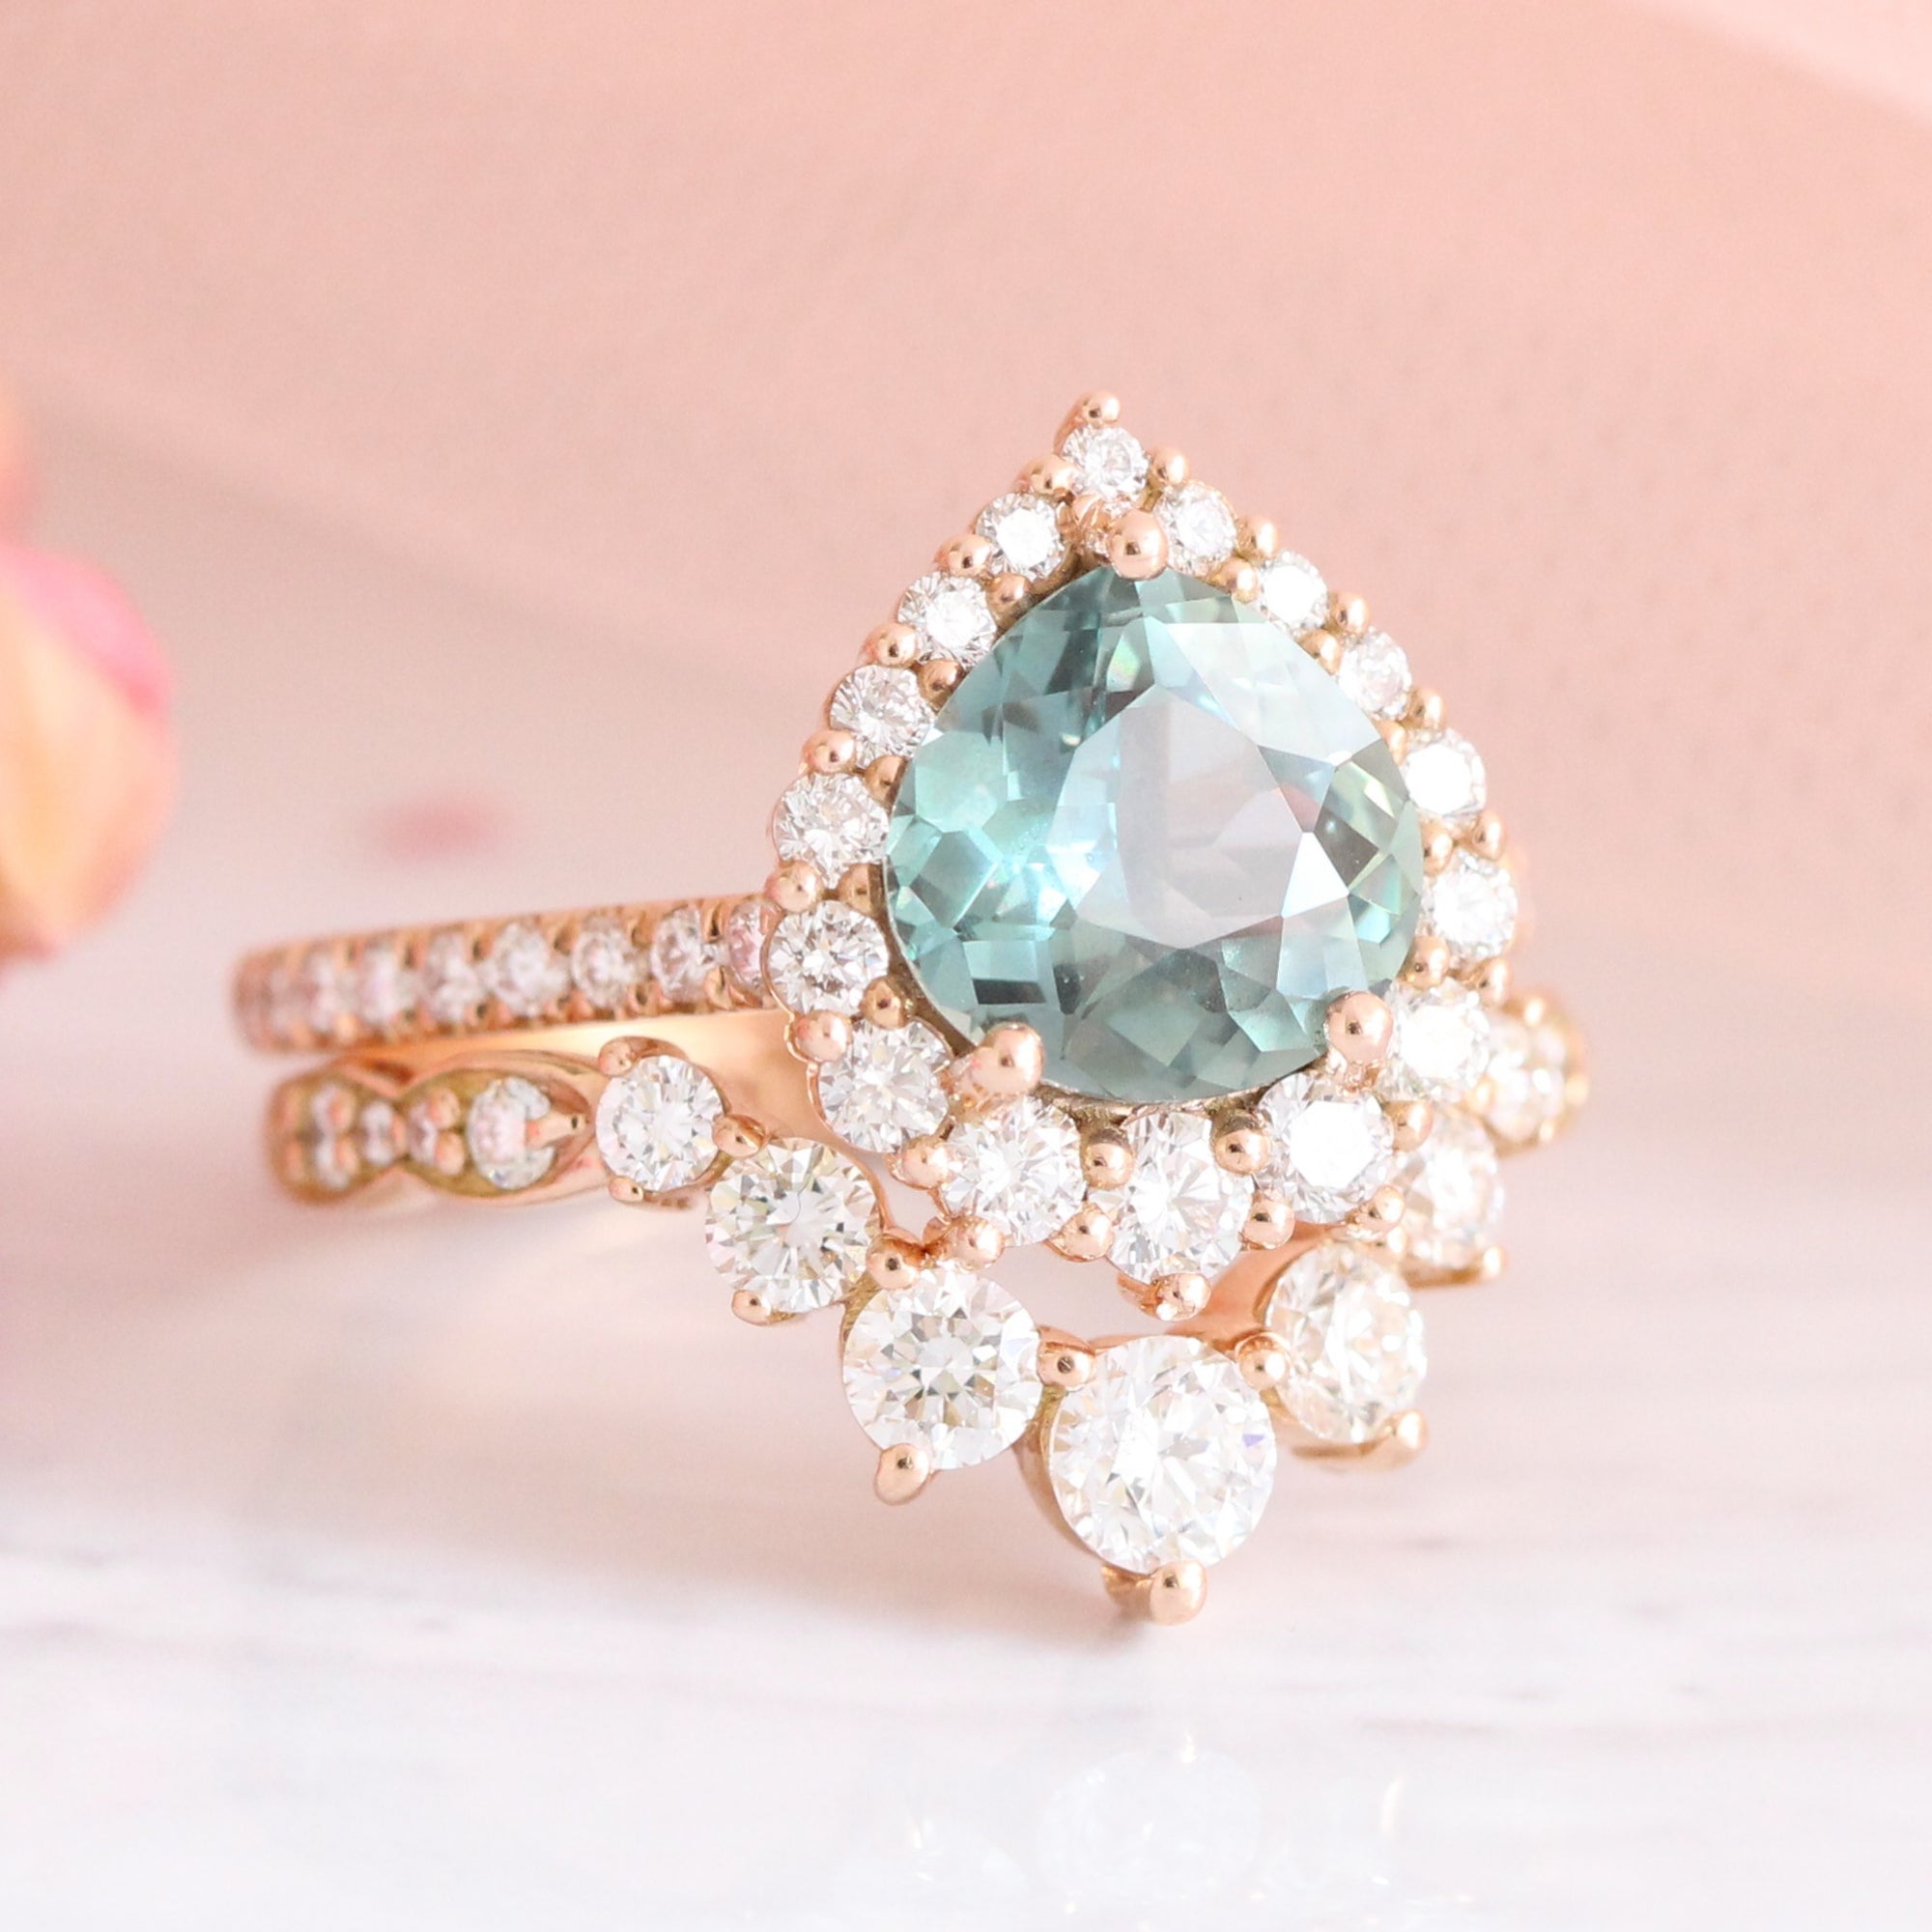 Montana green sapphire engagement rings, sea-foam green sapphire rings, emerald rings la more design jewelry